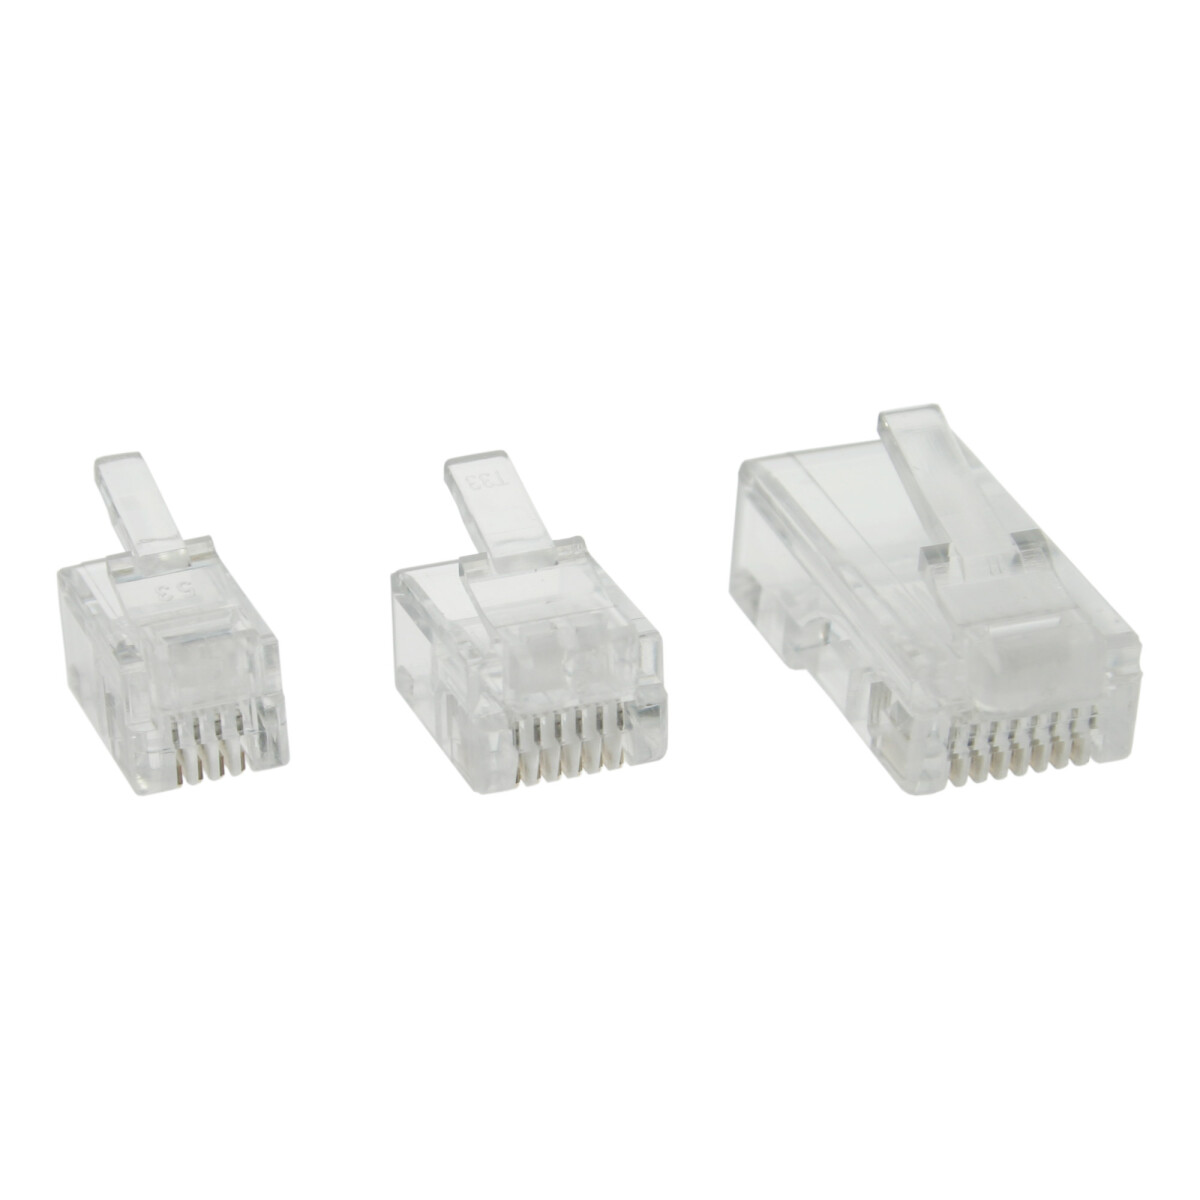 InLine® Modular Plug 6P4C / RJ11 for flat Cable, 10 pcs.